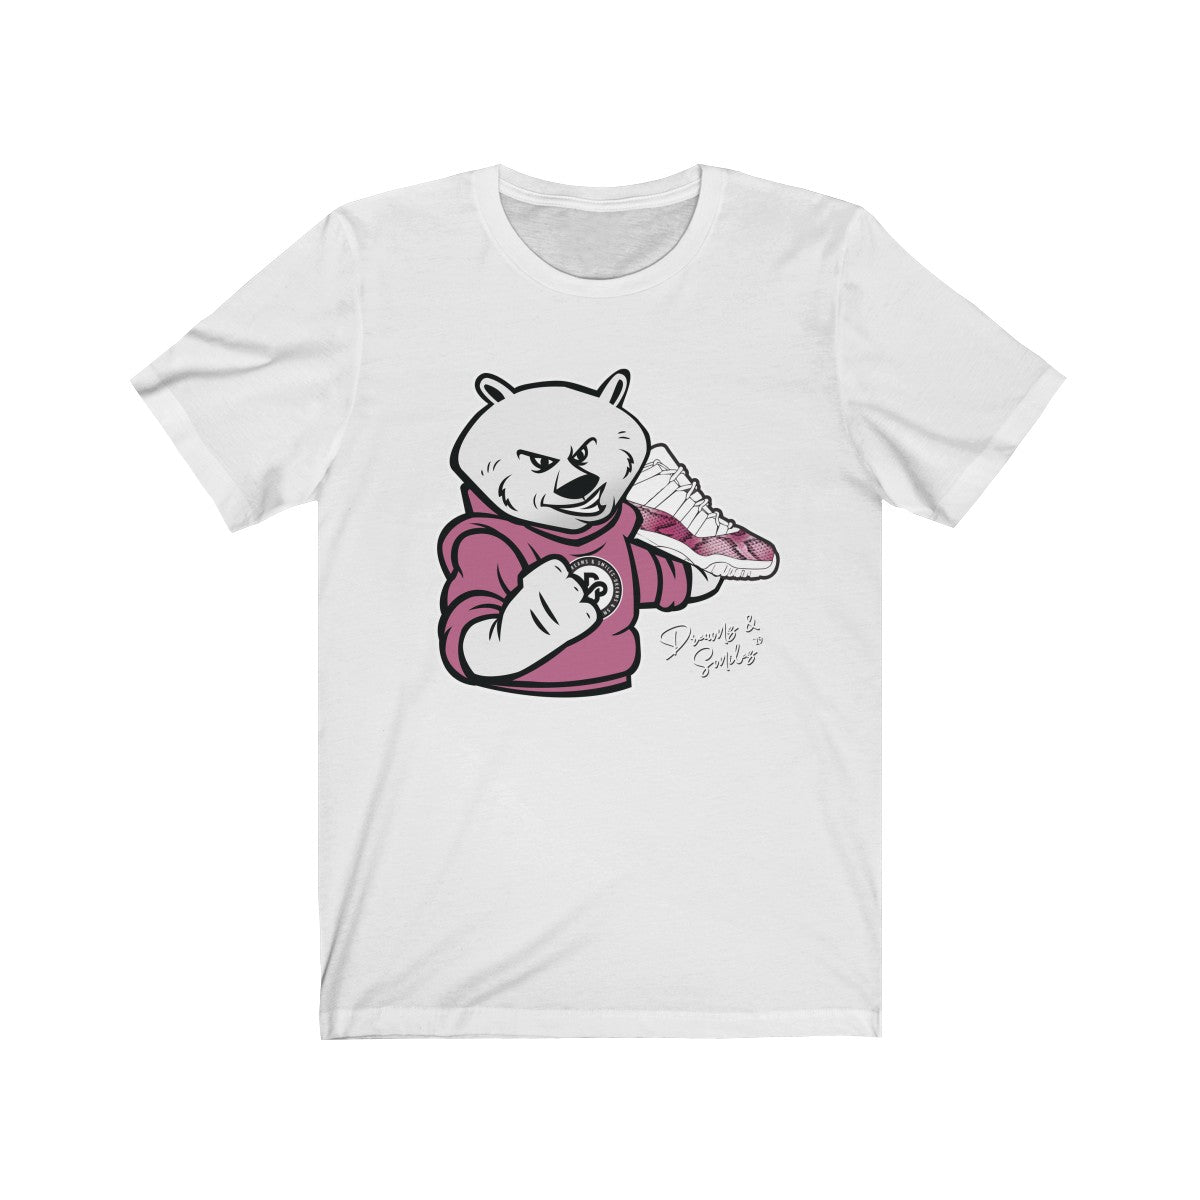 'D&S Bear' in Pink Short Sleeve Tee